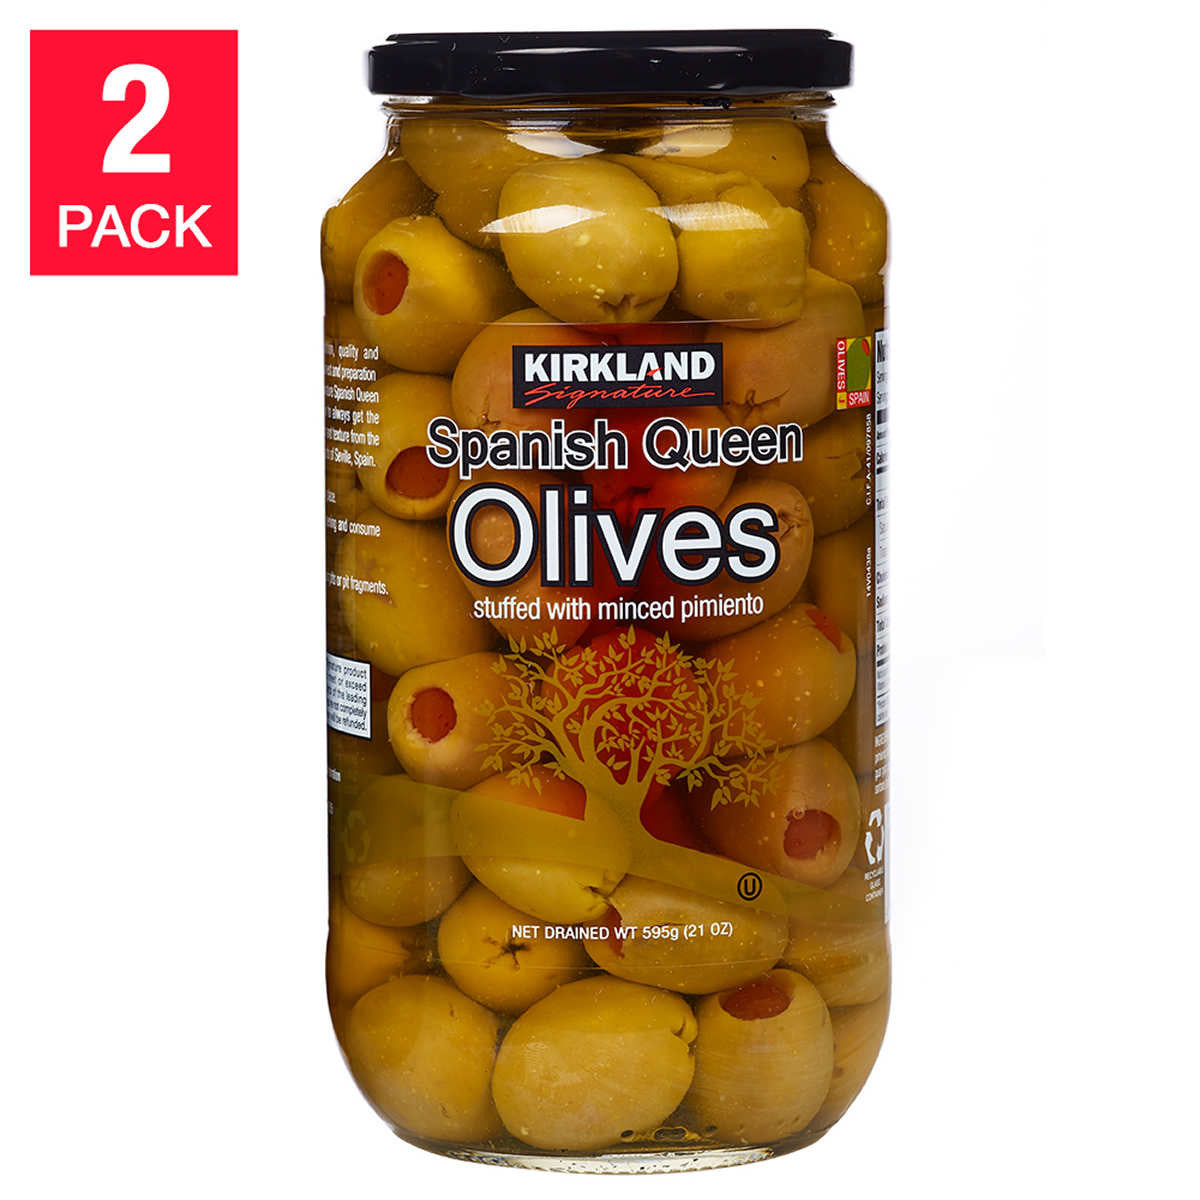 Kirkland Signature Spanish Queen Olives 21 oz., 2-pack